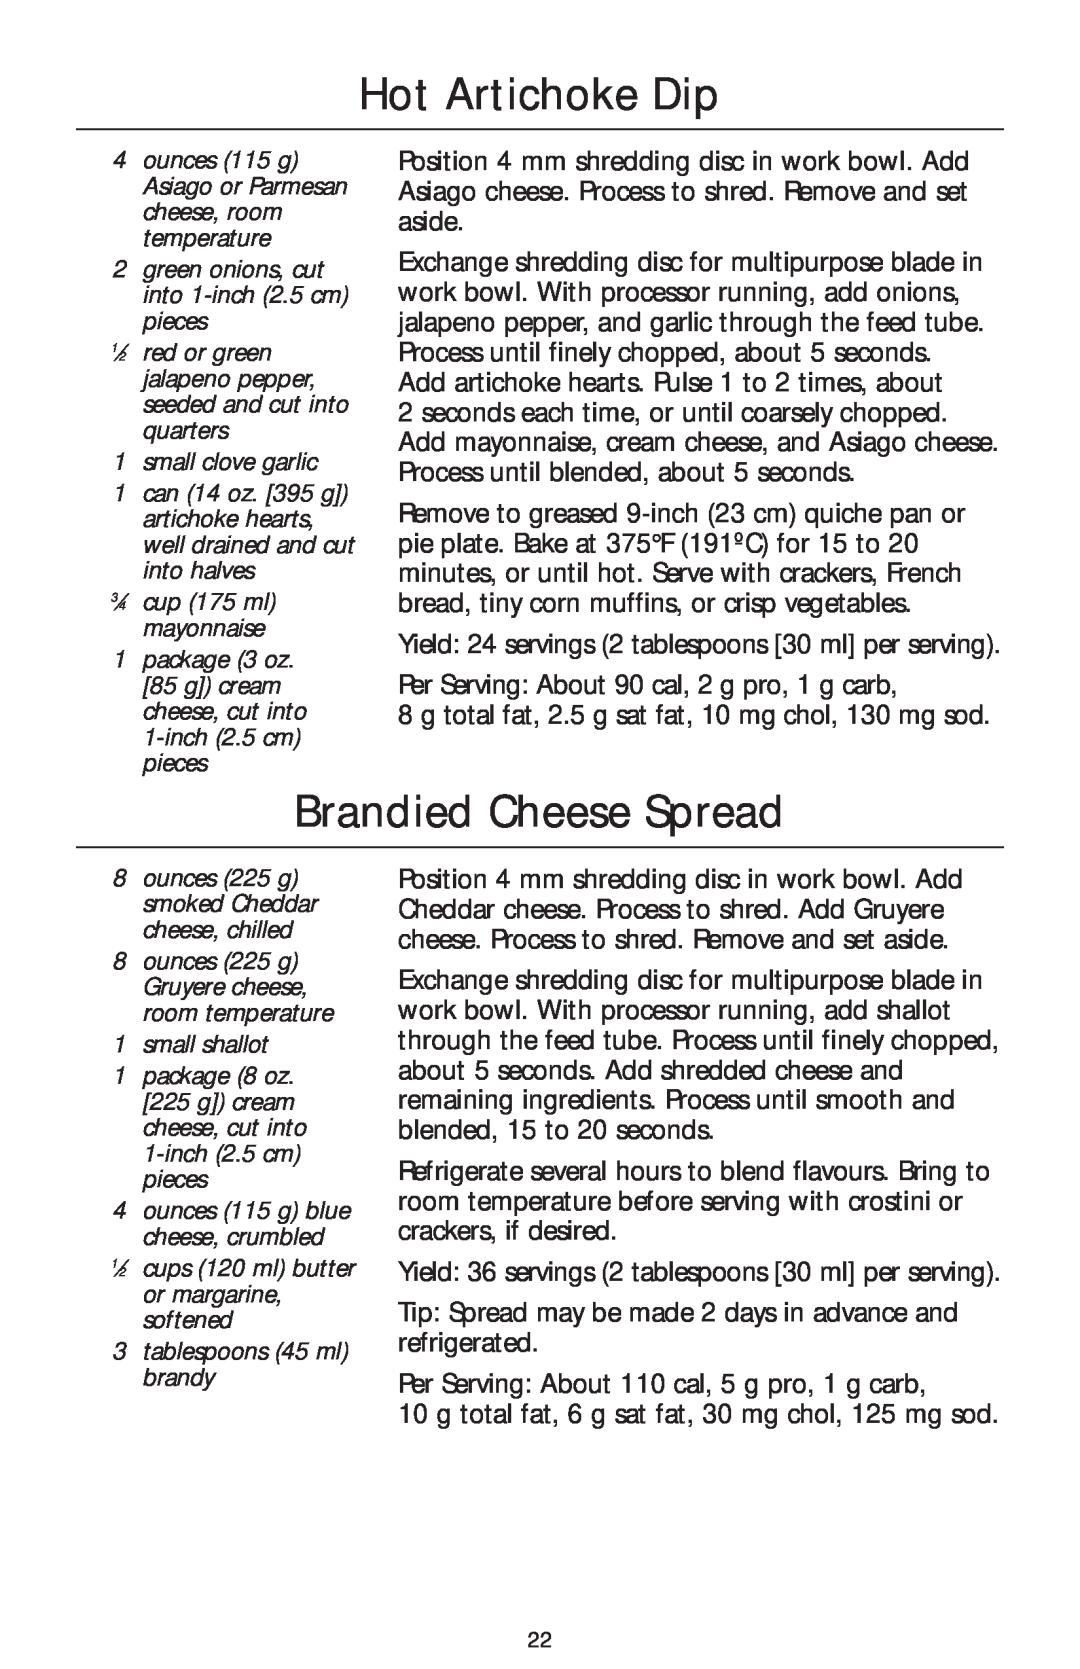 KitchenAid 4KFP750 manual Hot Artichoke Dip, Brandied Cheese Spread 